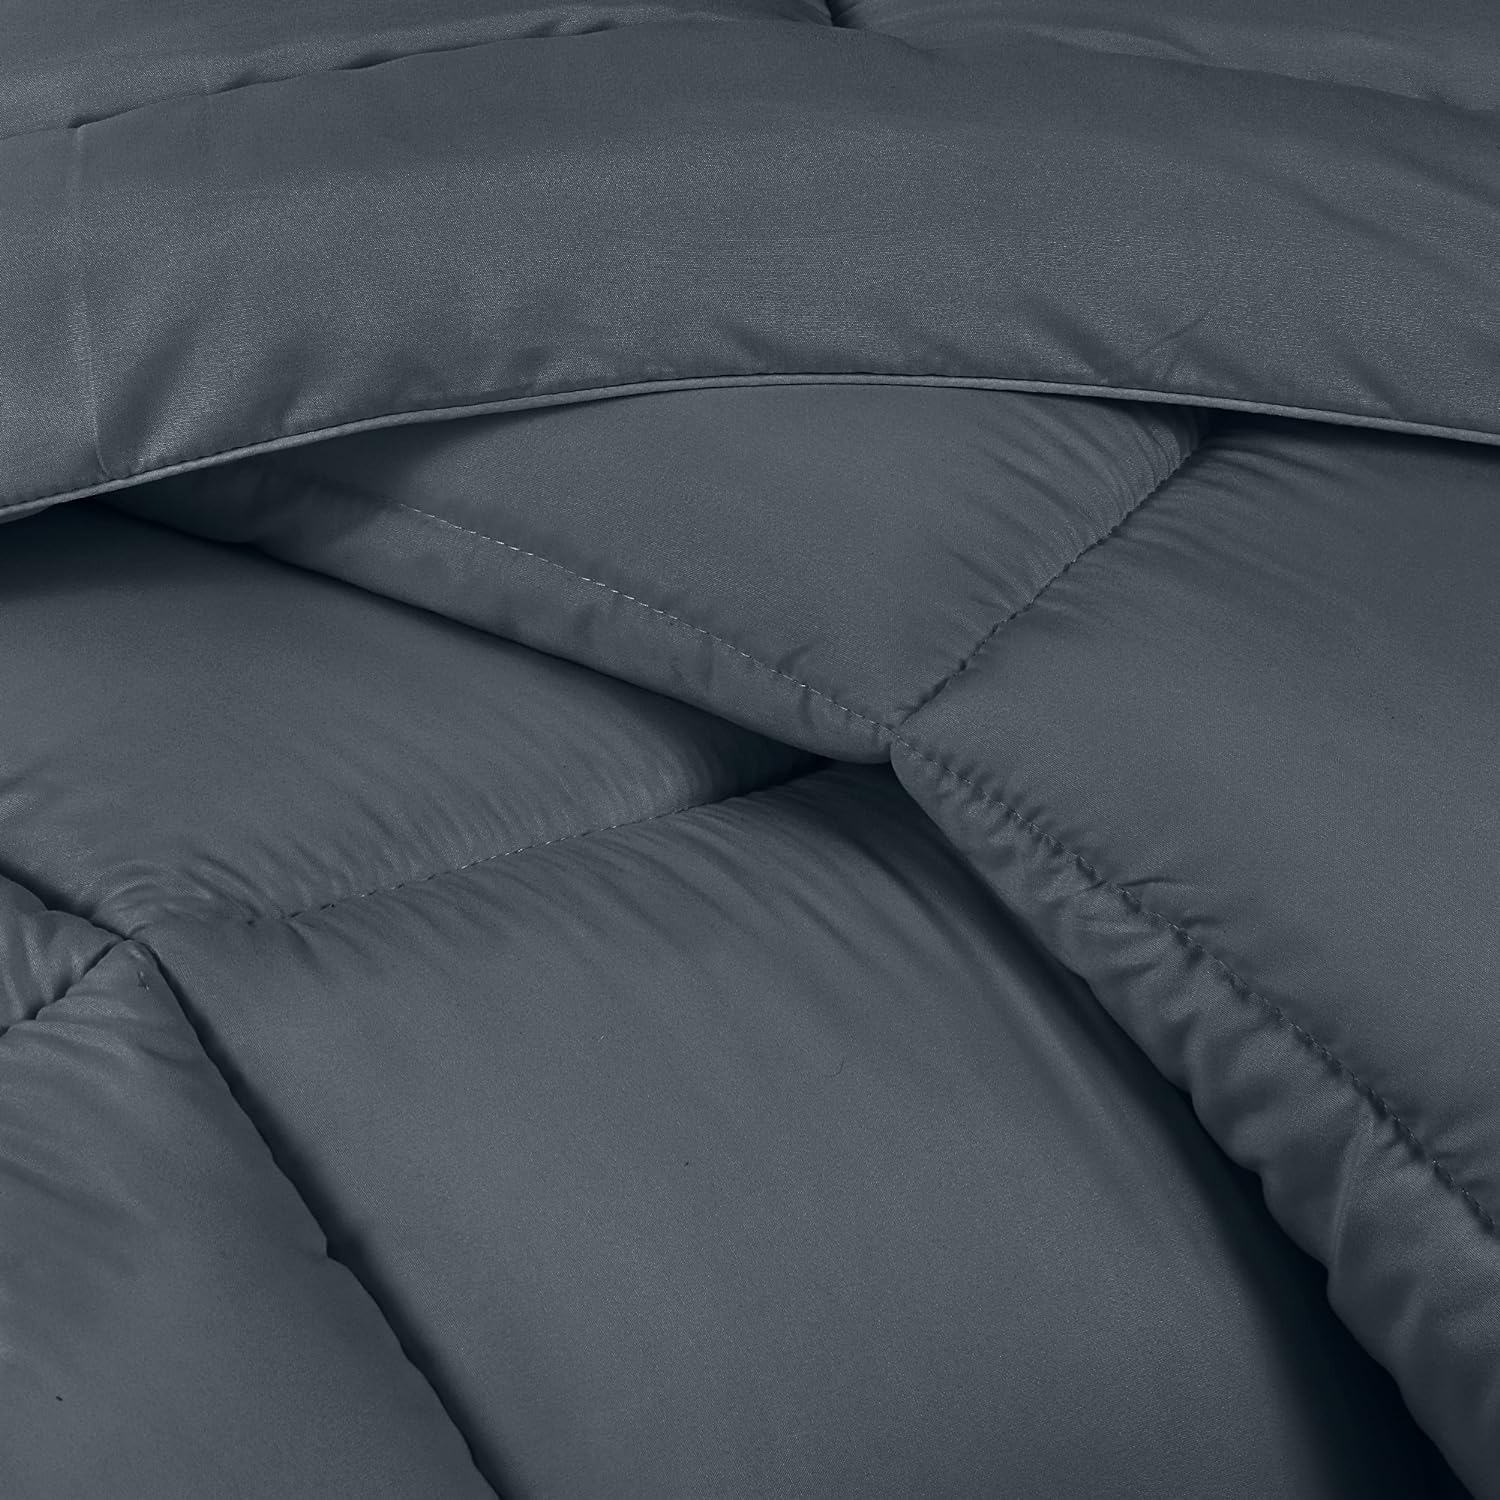 Utopia Bedding Comforter Duvet - D3 Surplus Outlet